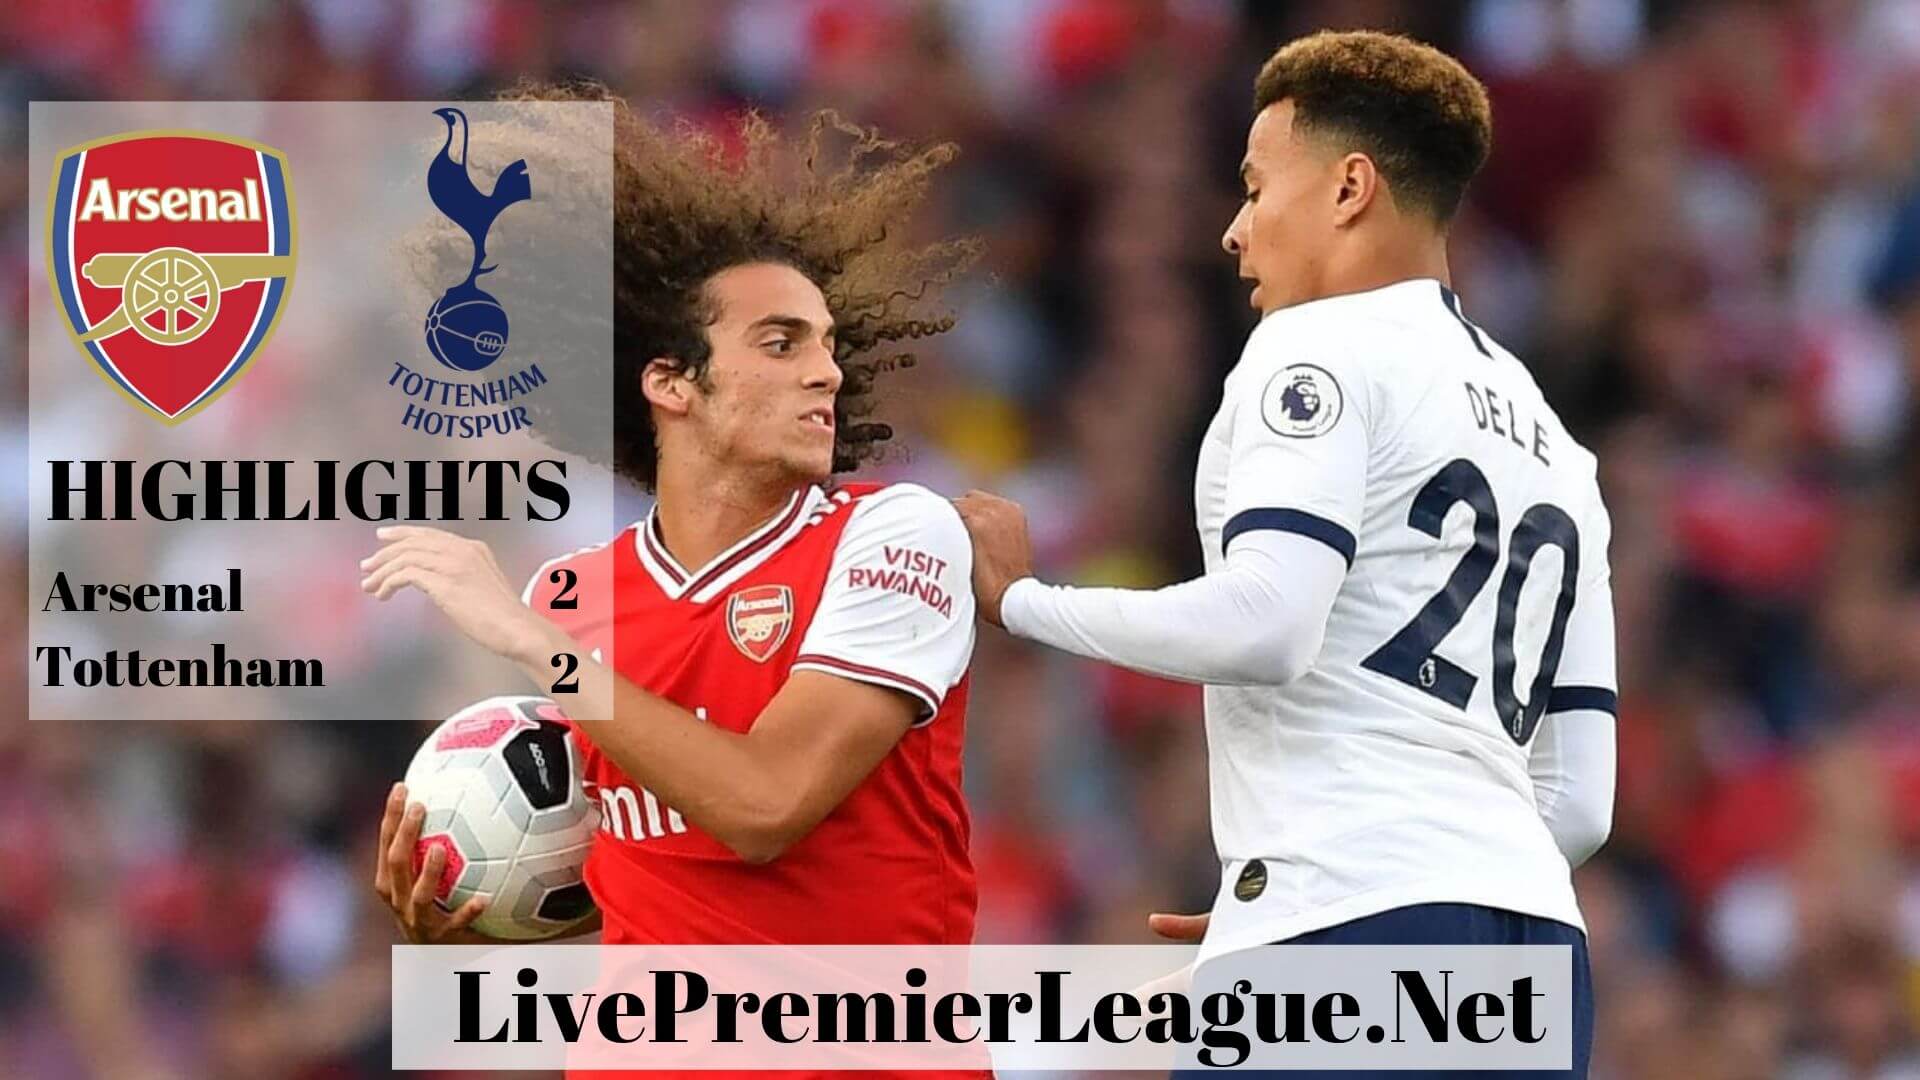 Arsenal vs Tottenham highlights 2019 Premier League